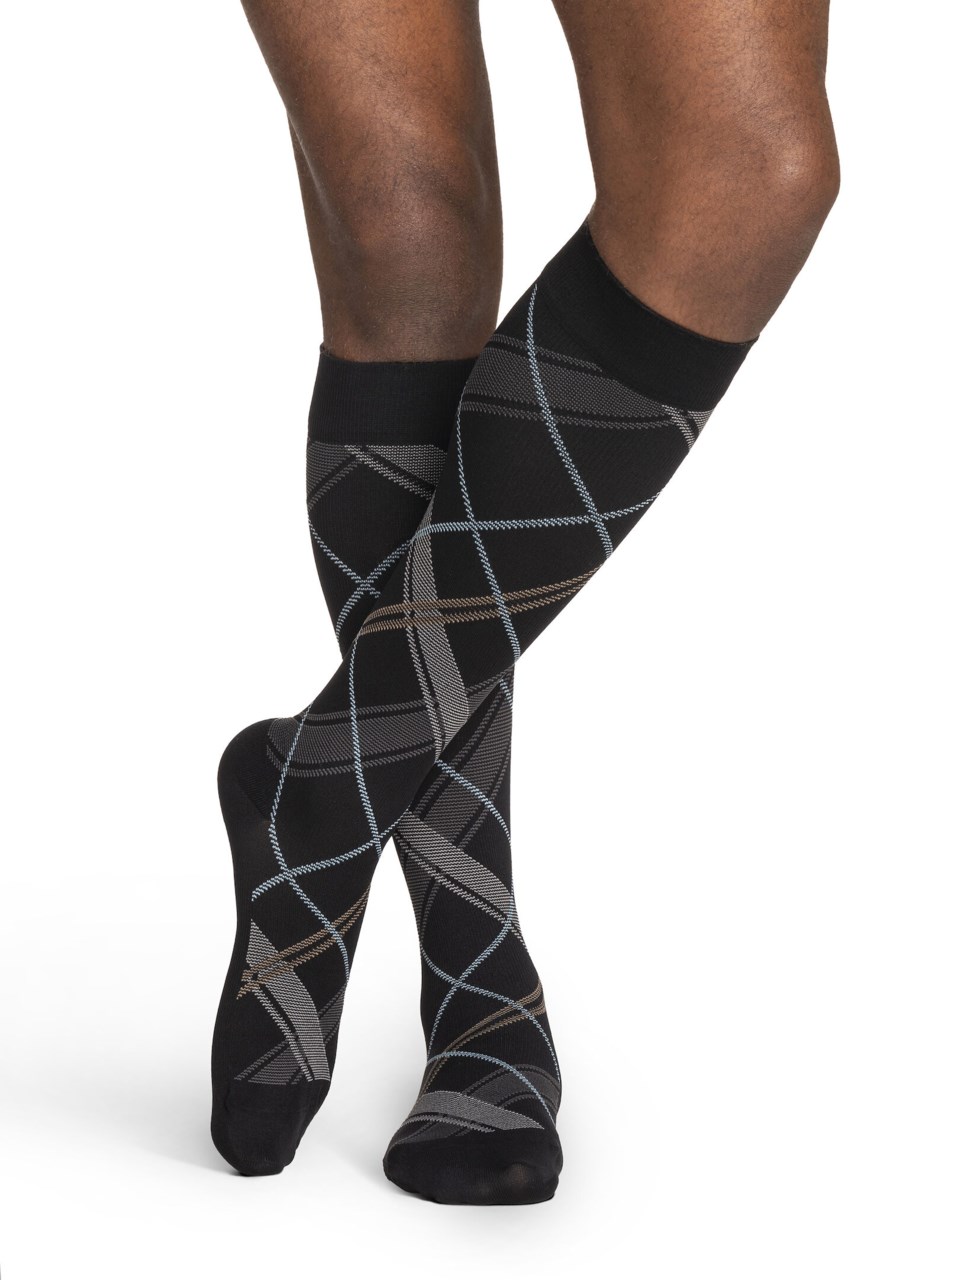 Man wearing STYLE MICROFIBER PATTERNS compression socks in BLACK PLAID